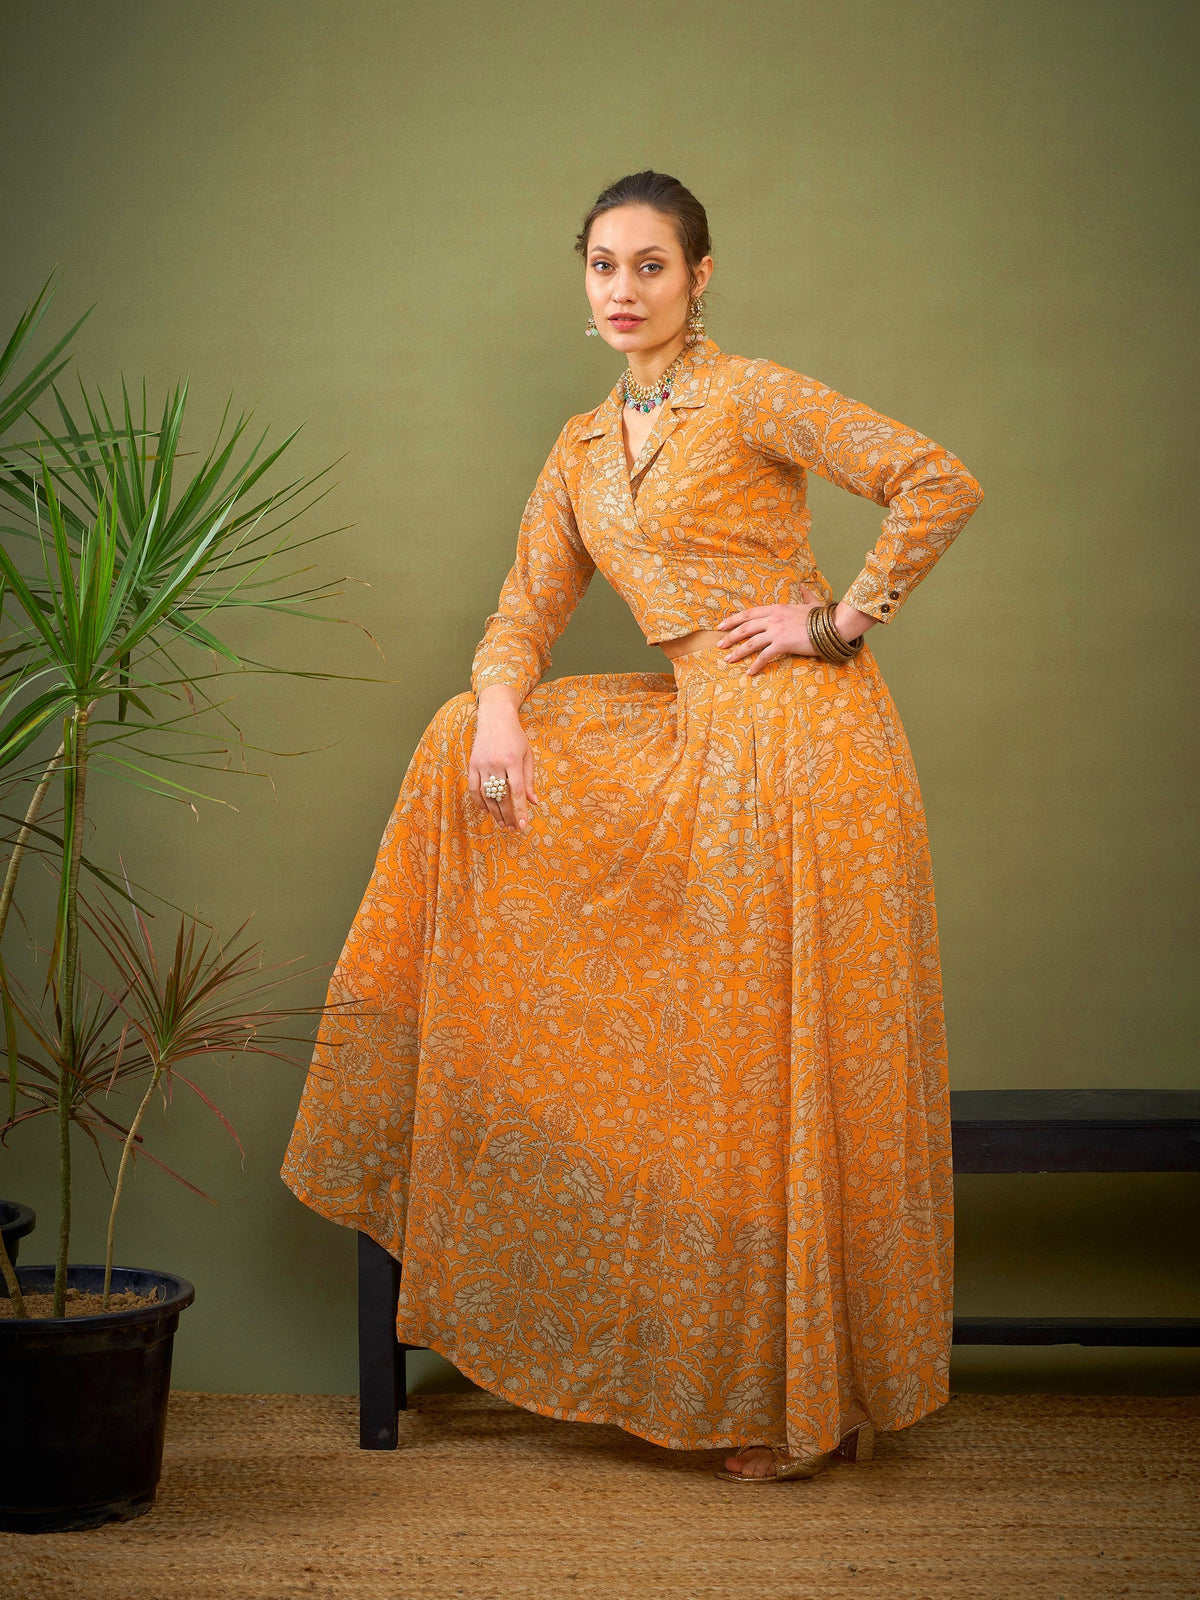 Yellow Floral Ankarkali Skirt-Shae by SASSAFRAS